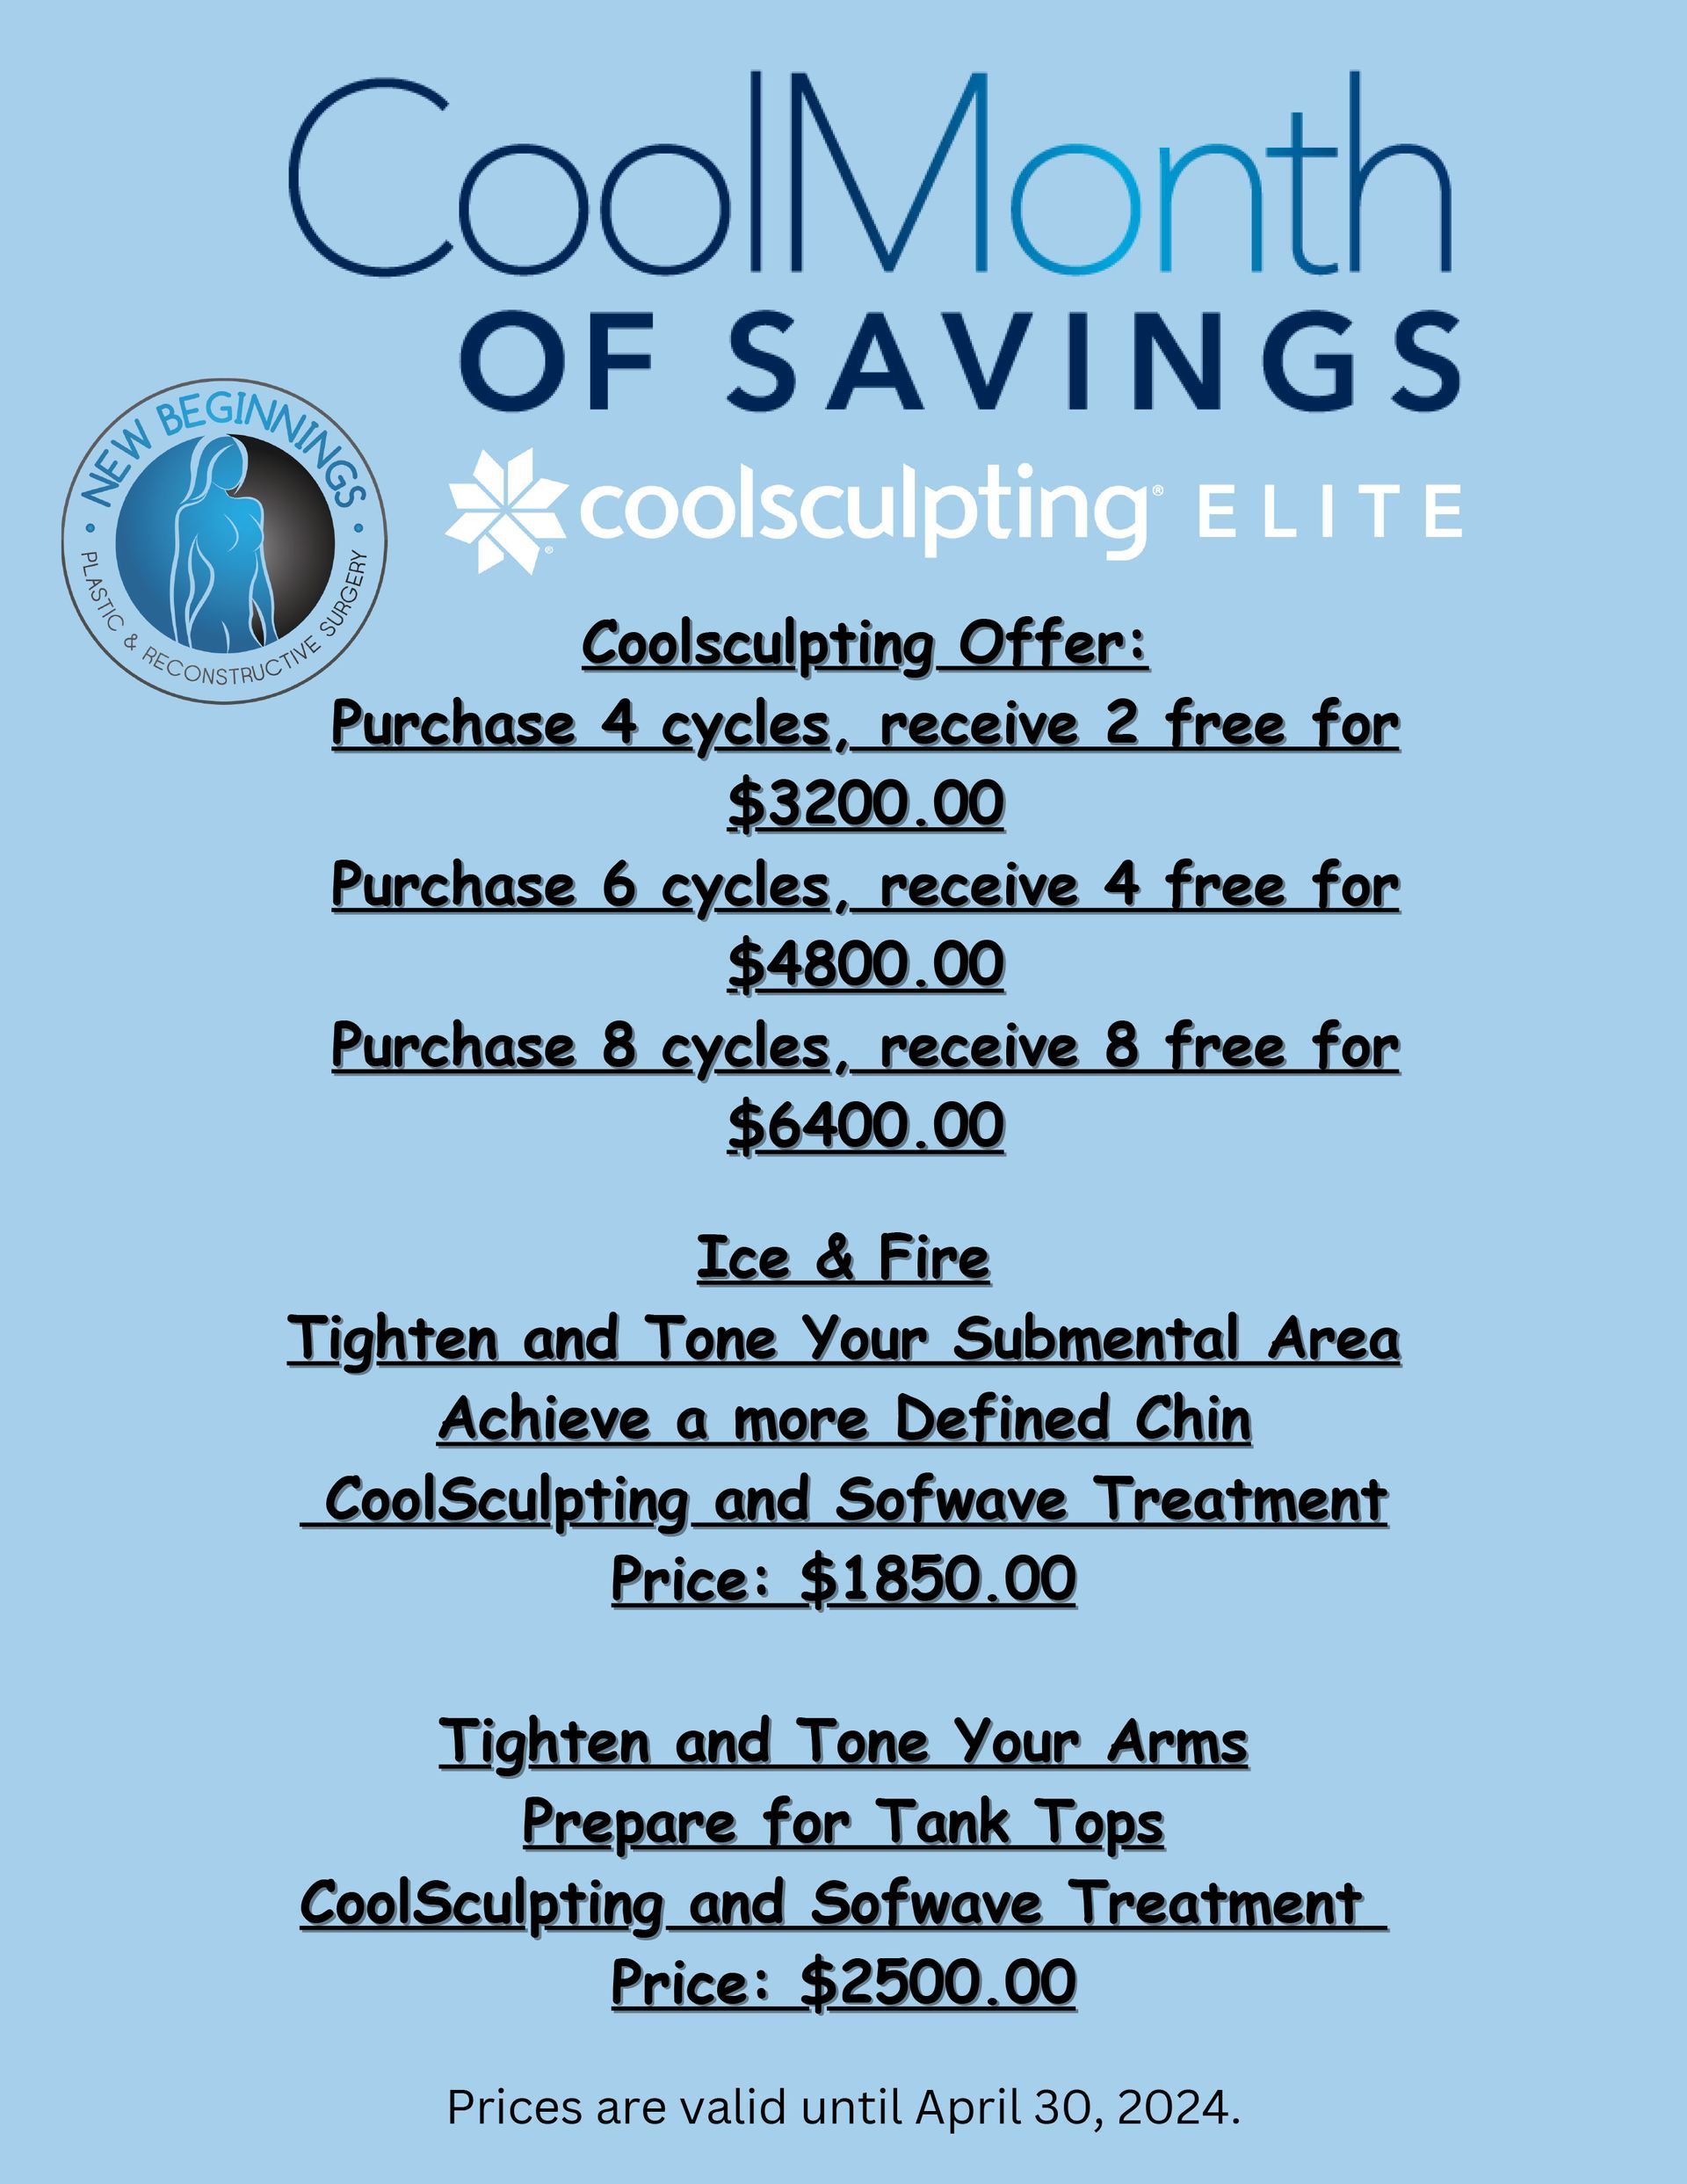 Cool month of savings coolsculpting ELITE